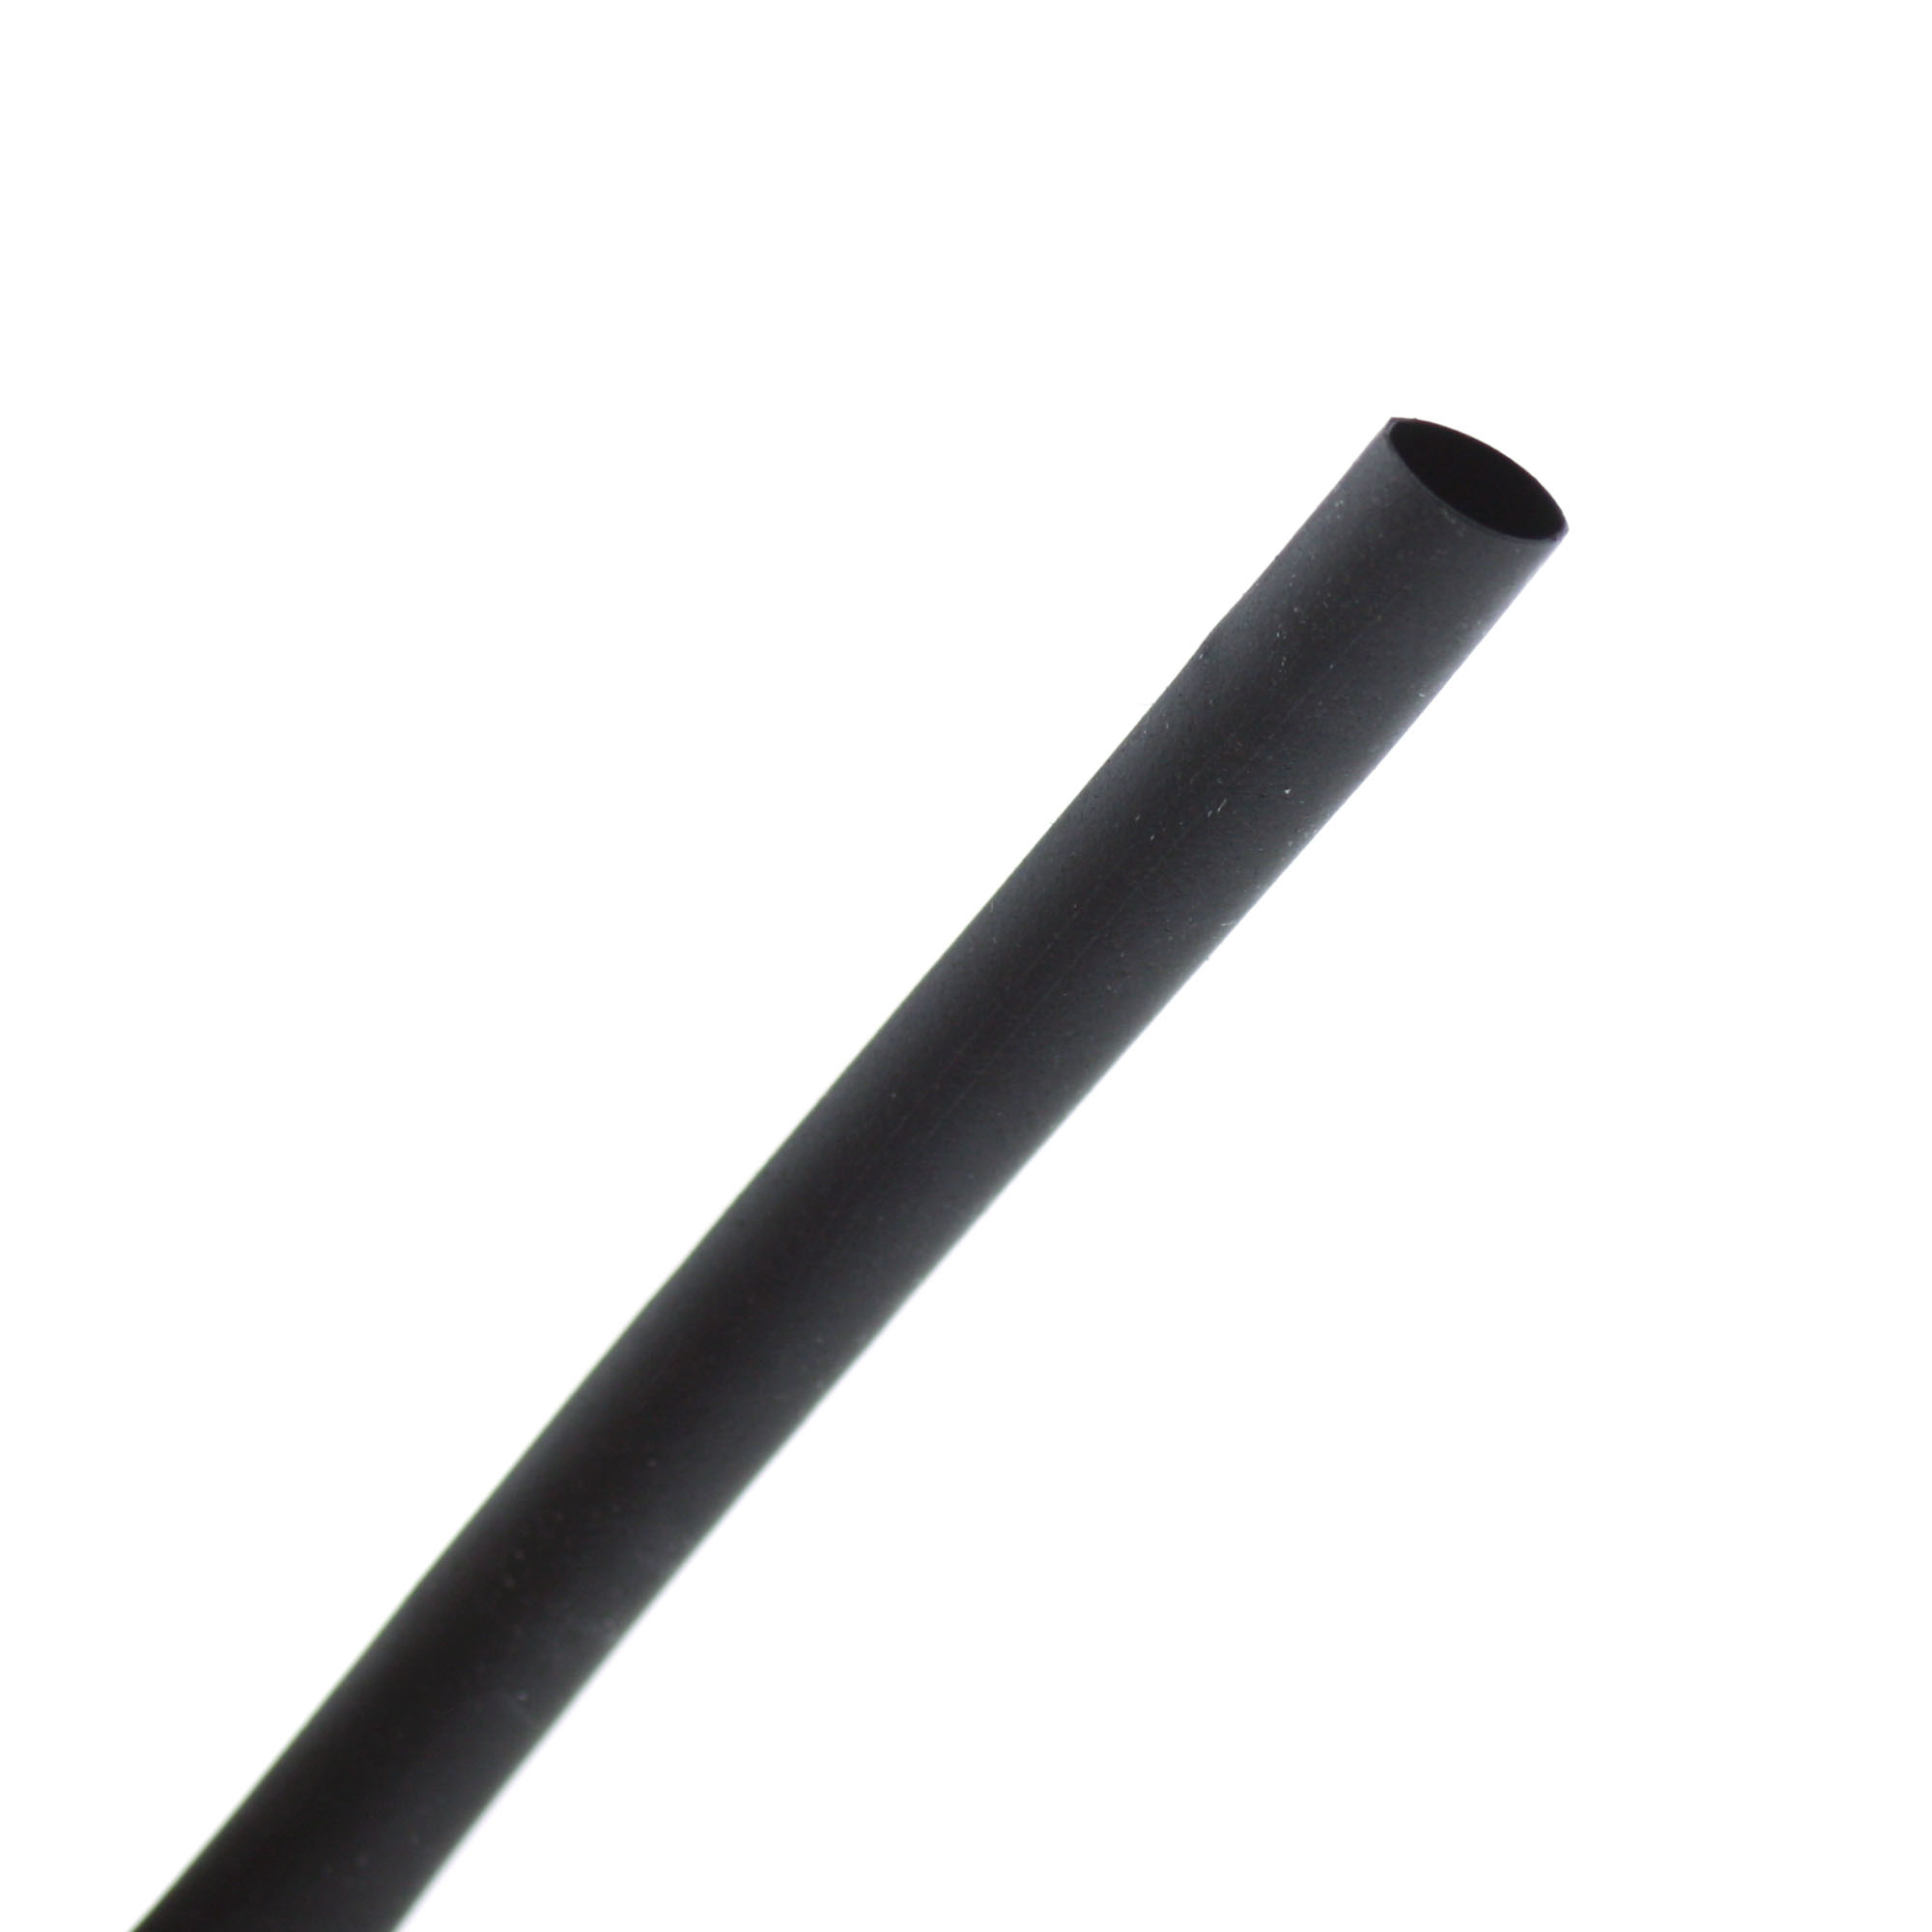 Heat shrink tube 2:1 / 4,8-2,4mm, 9,5m, black